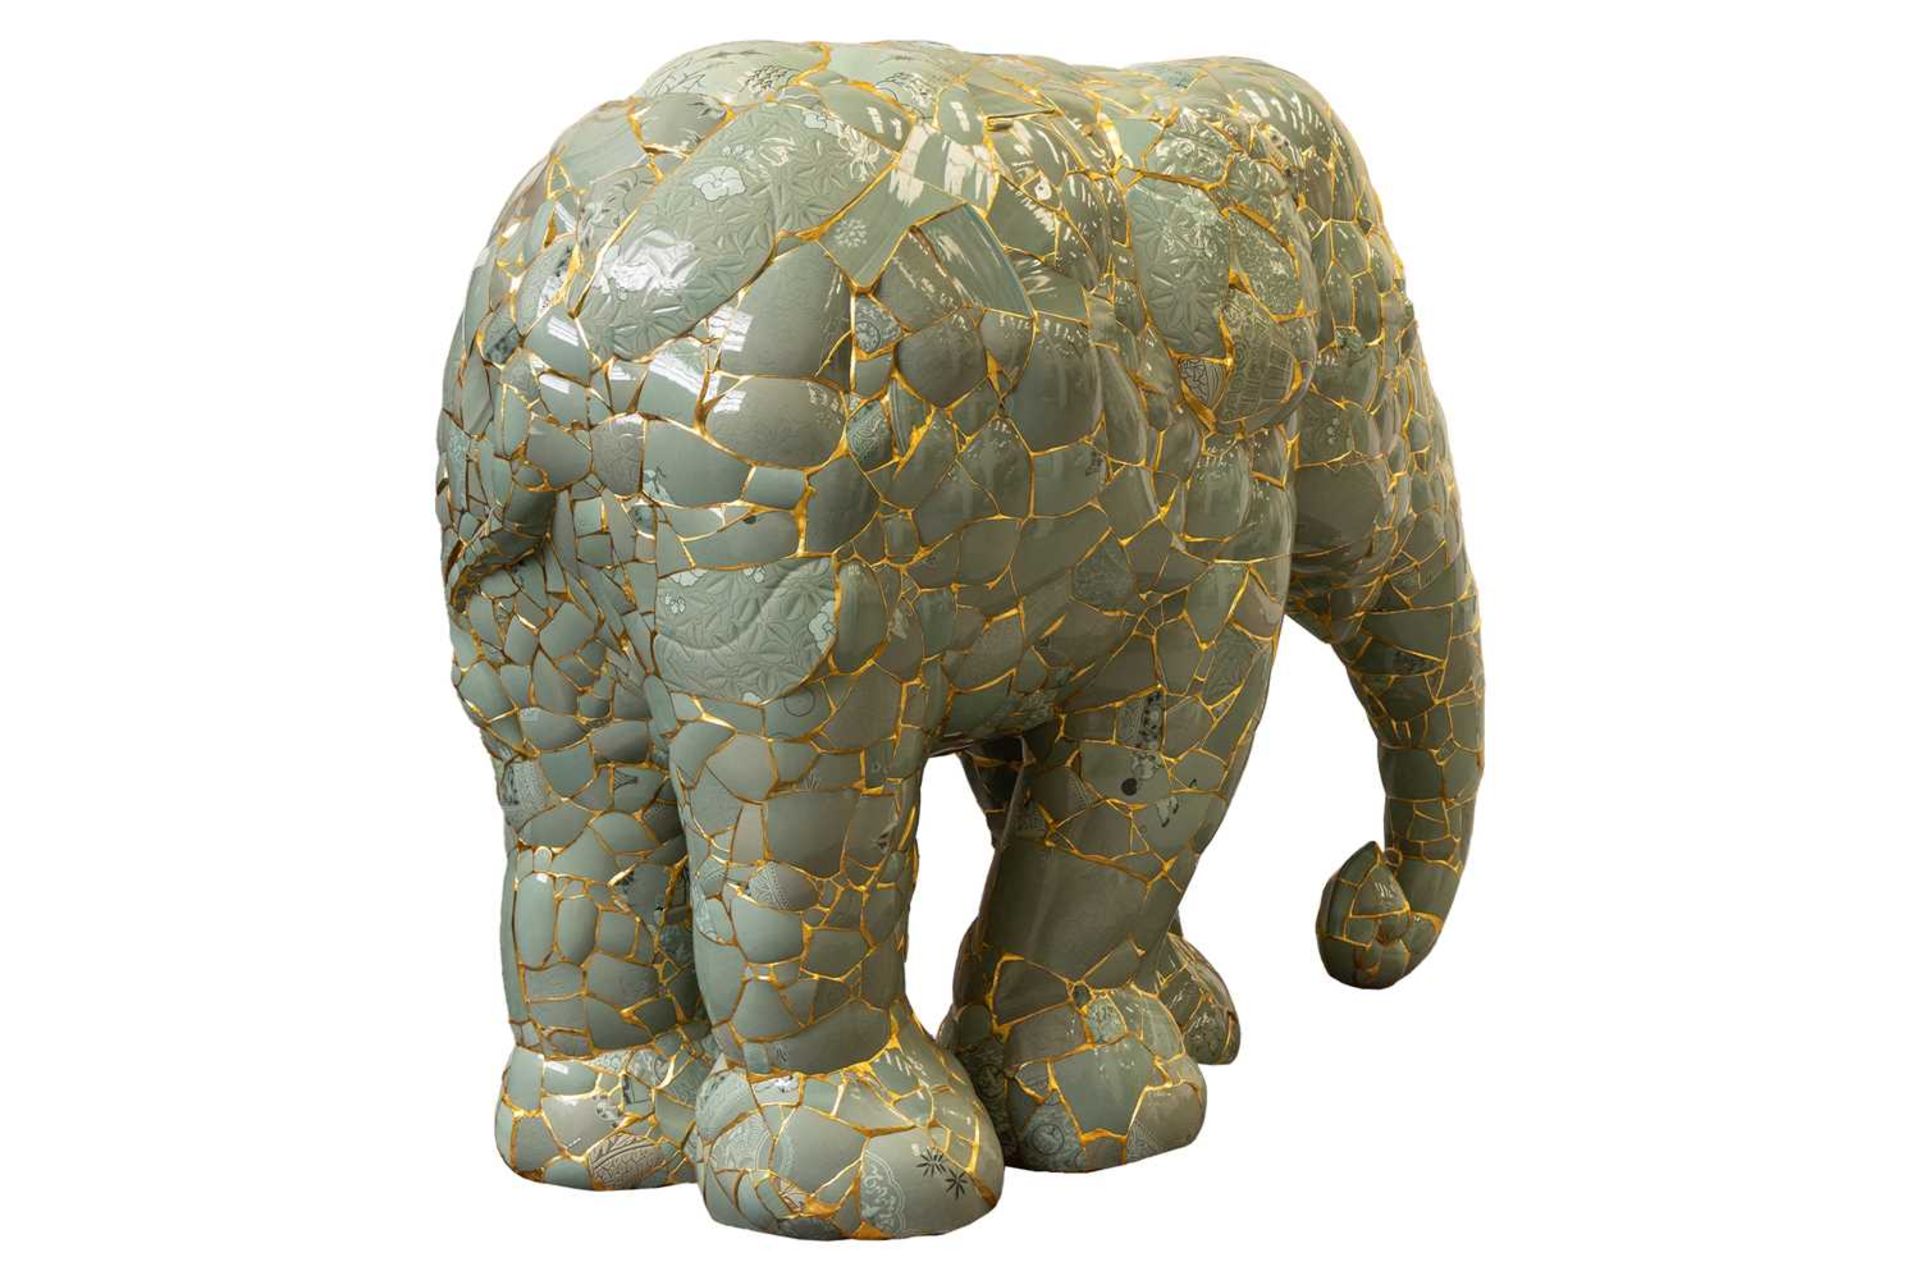 Yeesookyung (b. 1963) South Korean, 'Translated Vase Baby Elephant' (2012), celadon ceramic pieces f - Image 4 of 16